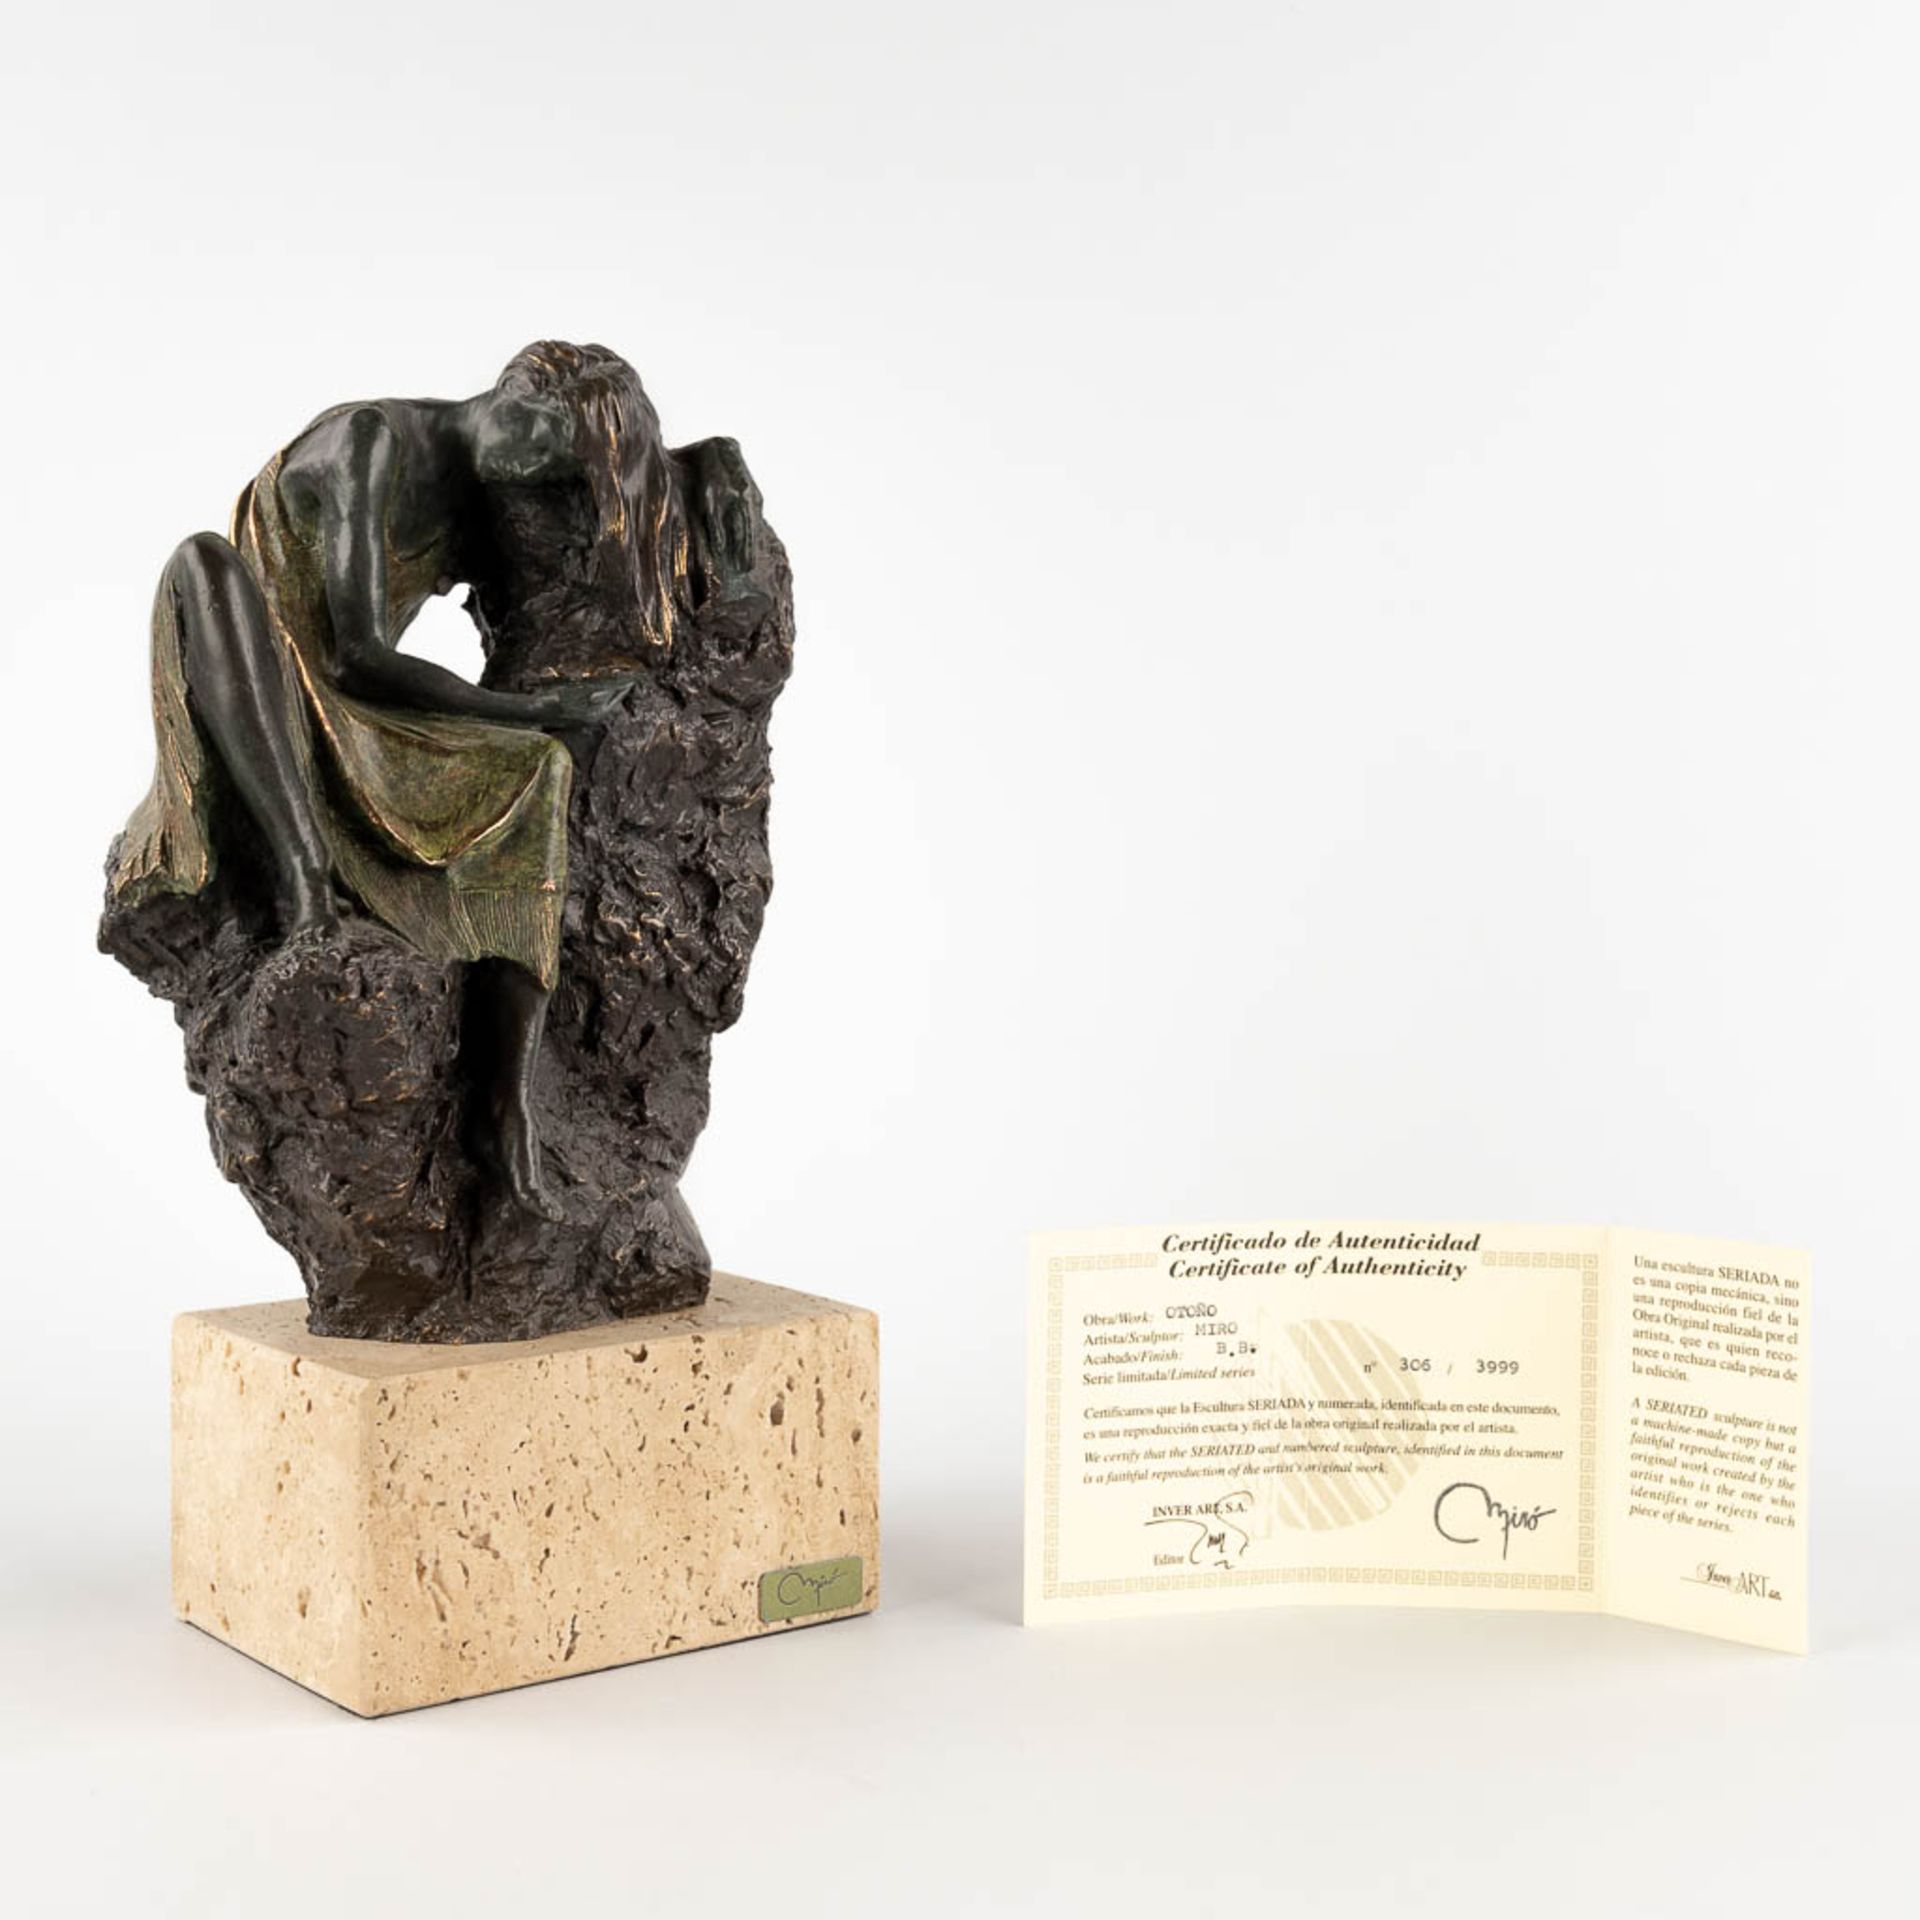 Joan MIRO (1893-1983)(after) 'Otono' patinated bronze. 286/3999. 1989. (H:22,5 cm) - Image 11 of 13